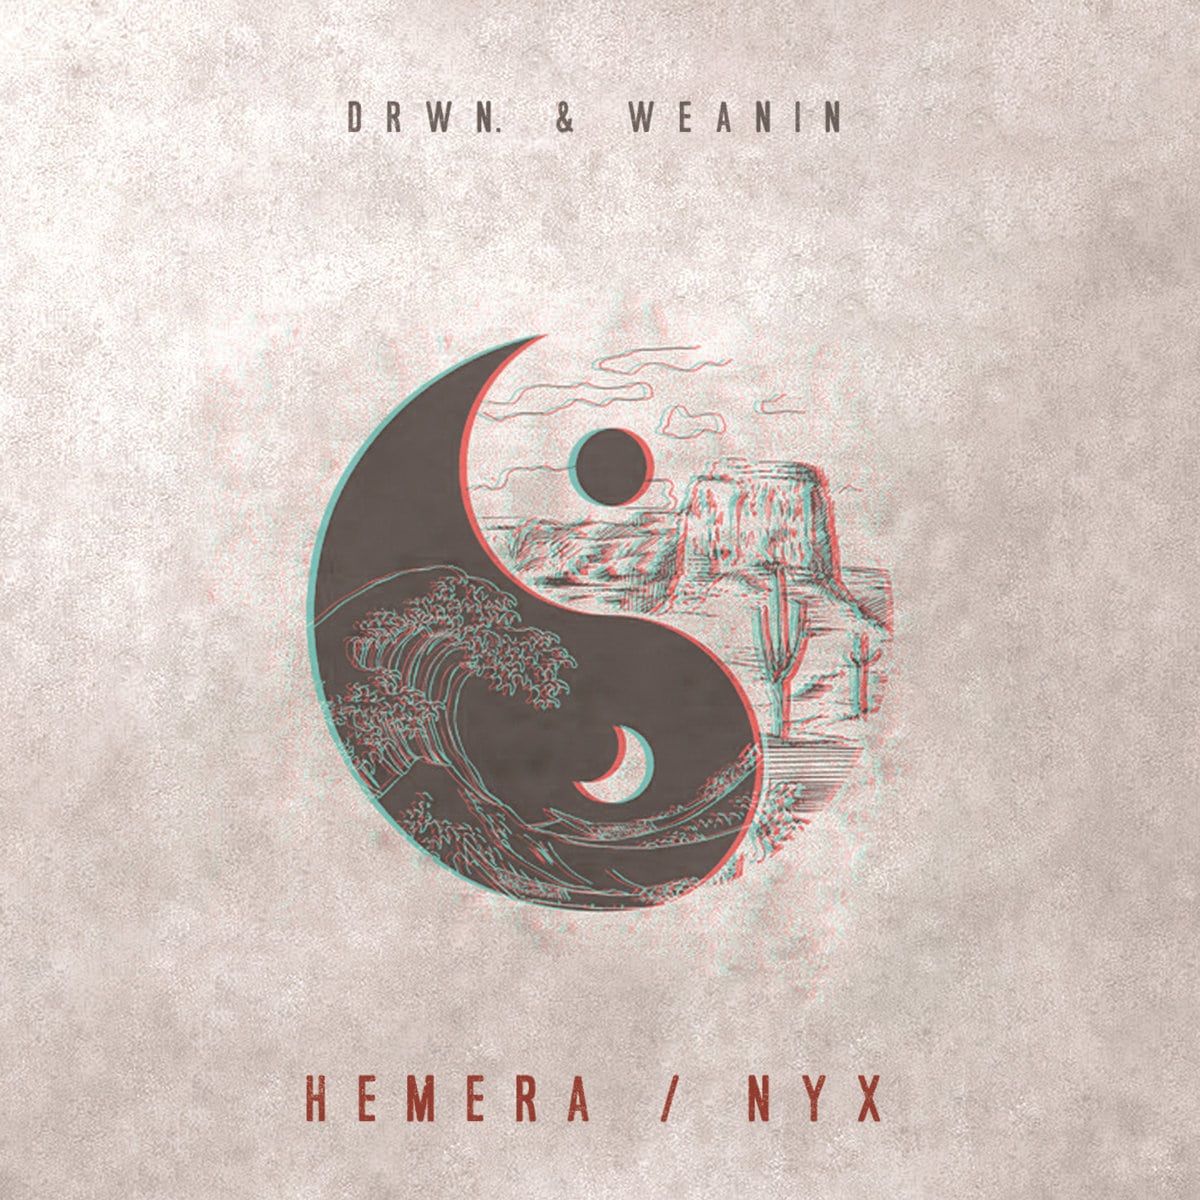 DRWN. & Weanin - "Hemera / Nyx" (Release)